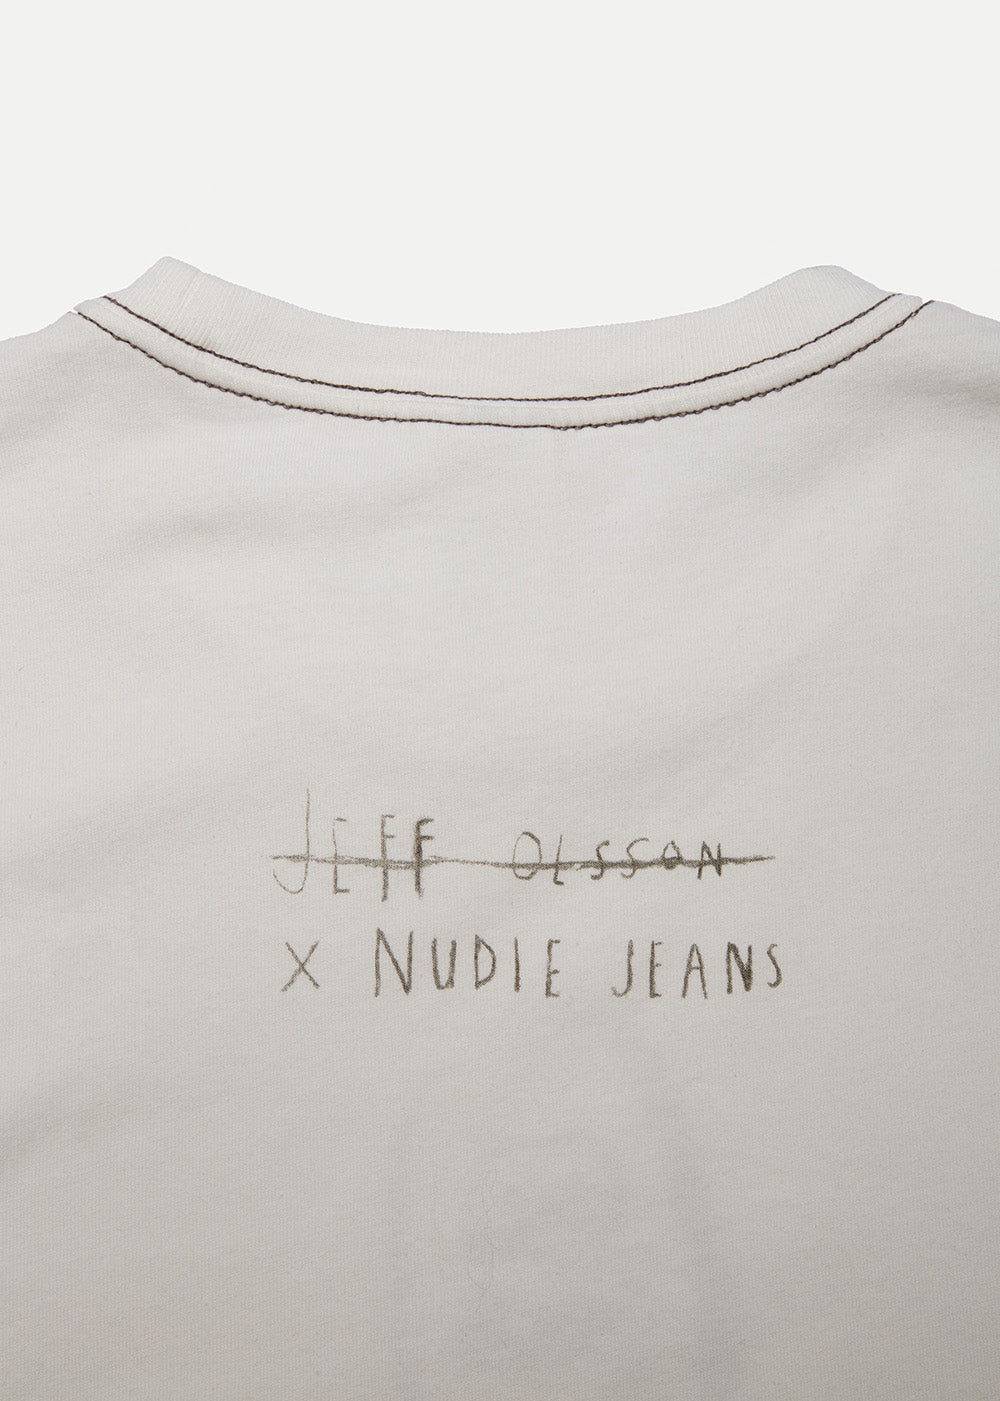 Jeff Olsson x Roy Born In Hell T-Shirt - Nudie Jeans - Danali